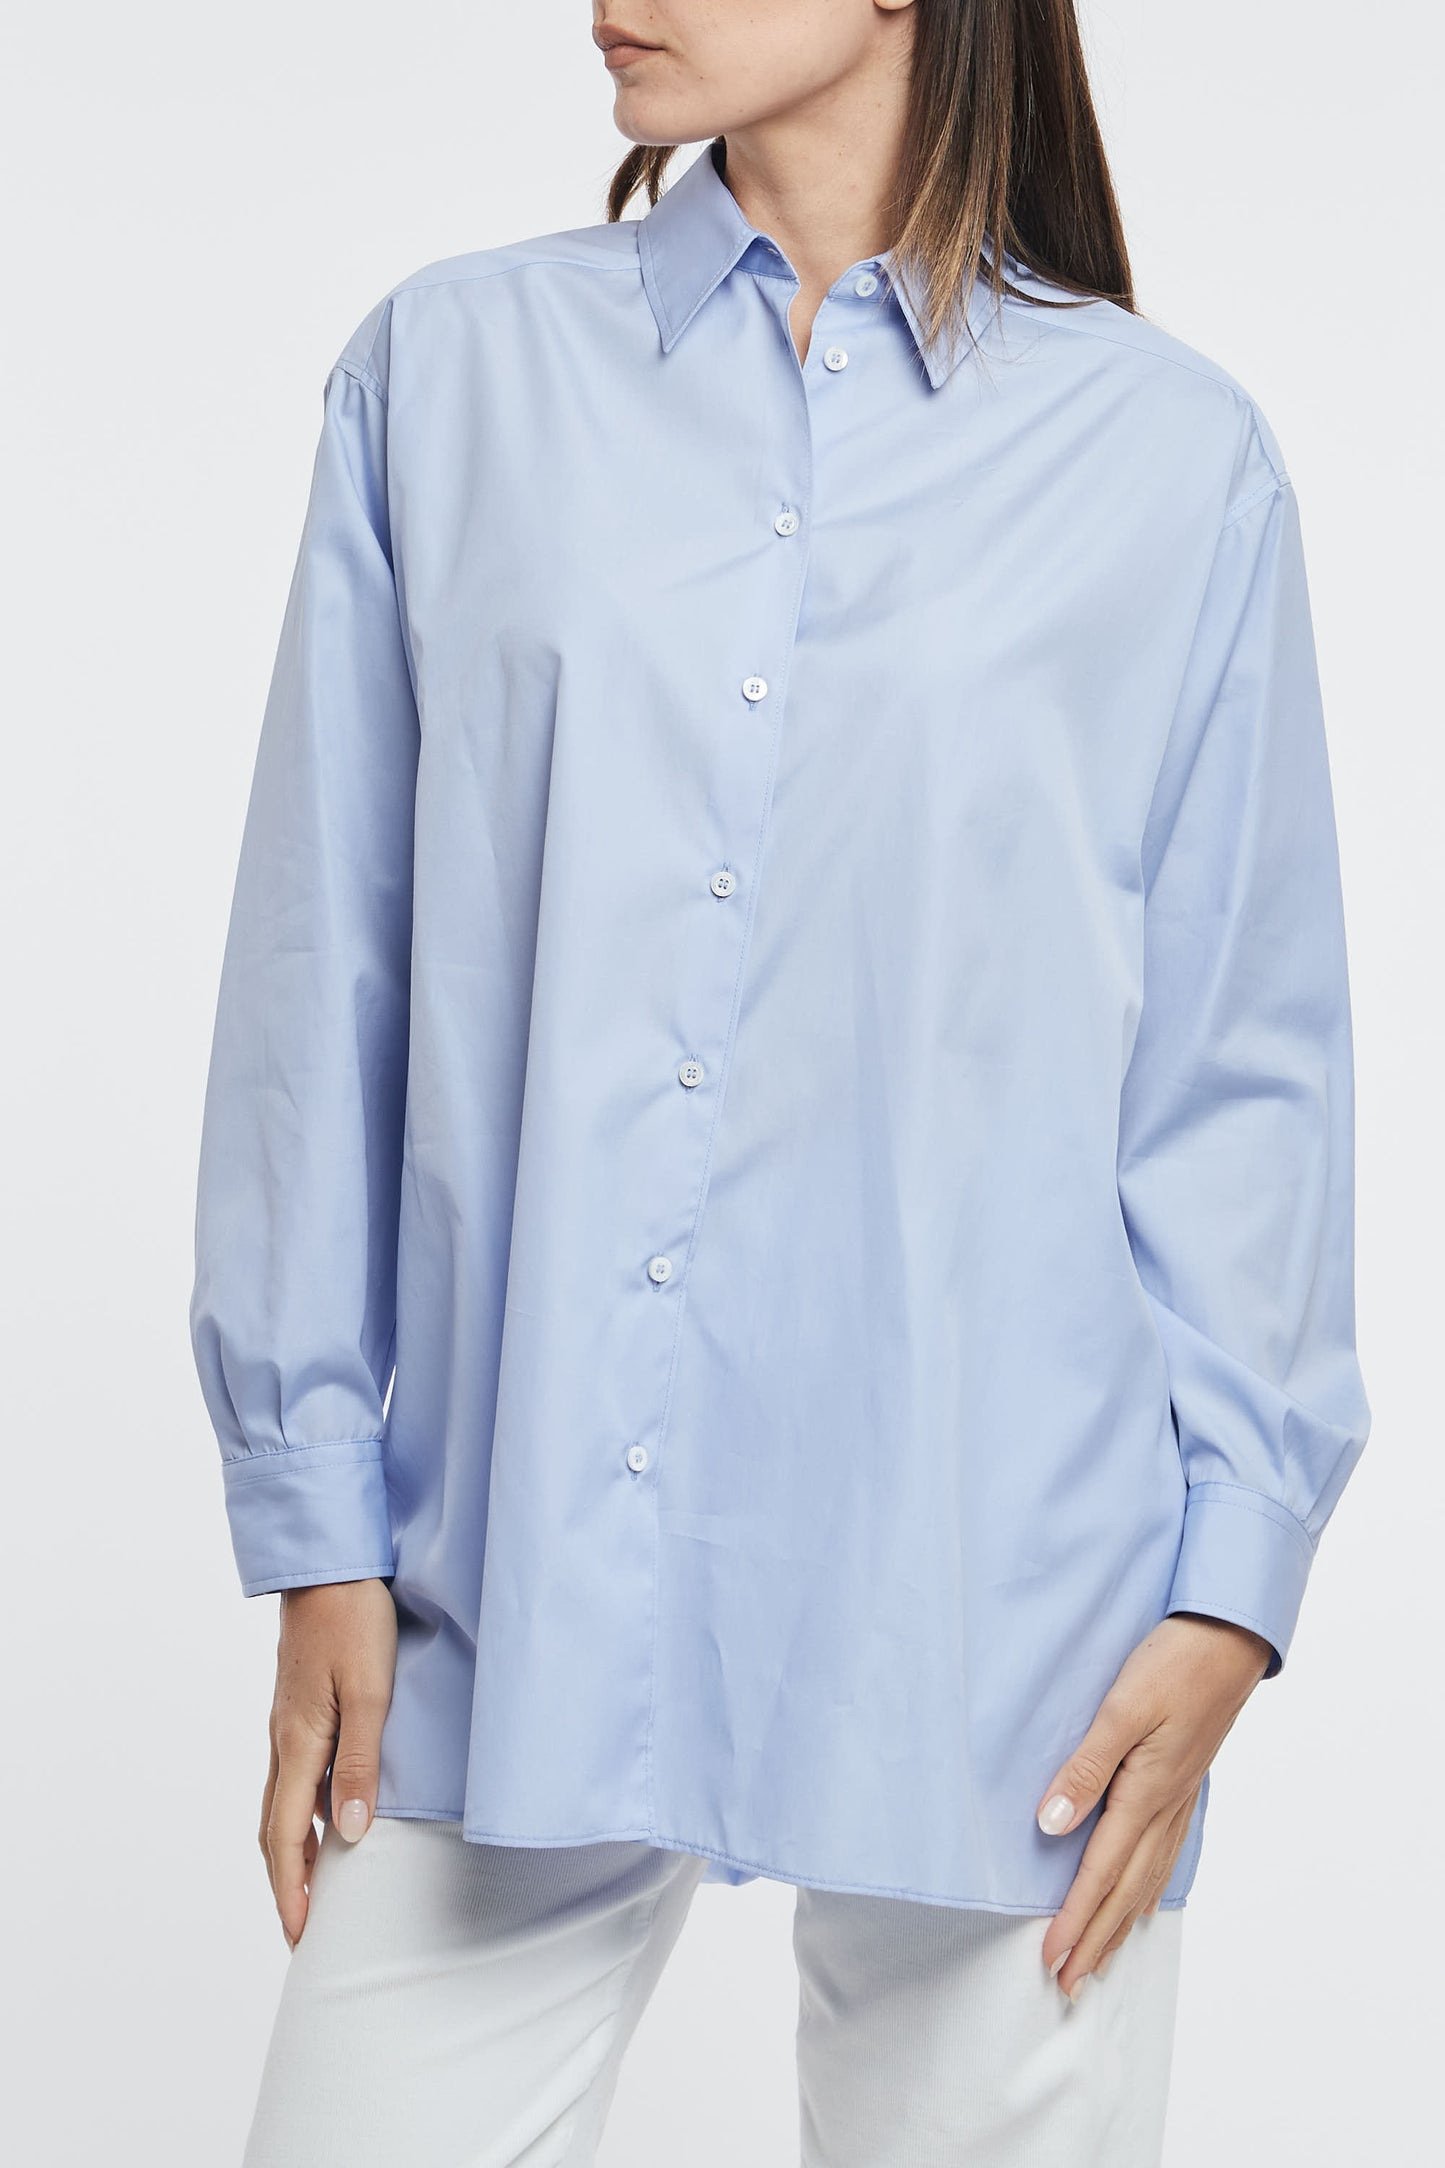  Aspesi Women's Light Blue Shirt 93115-26047 Azzurro Donna - 2